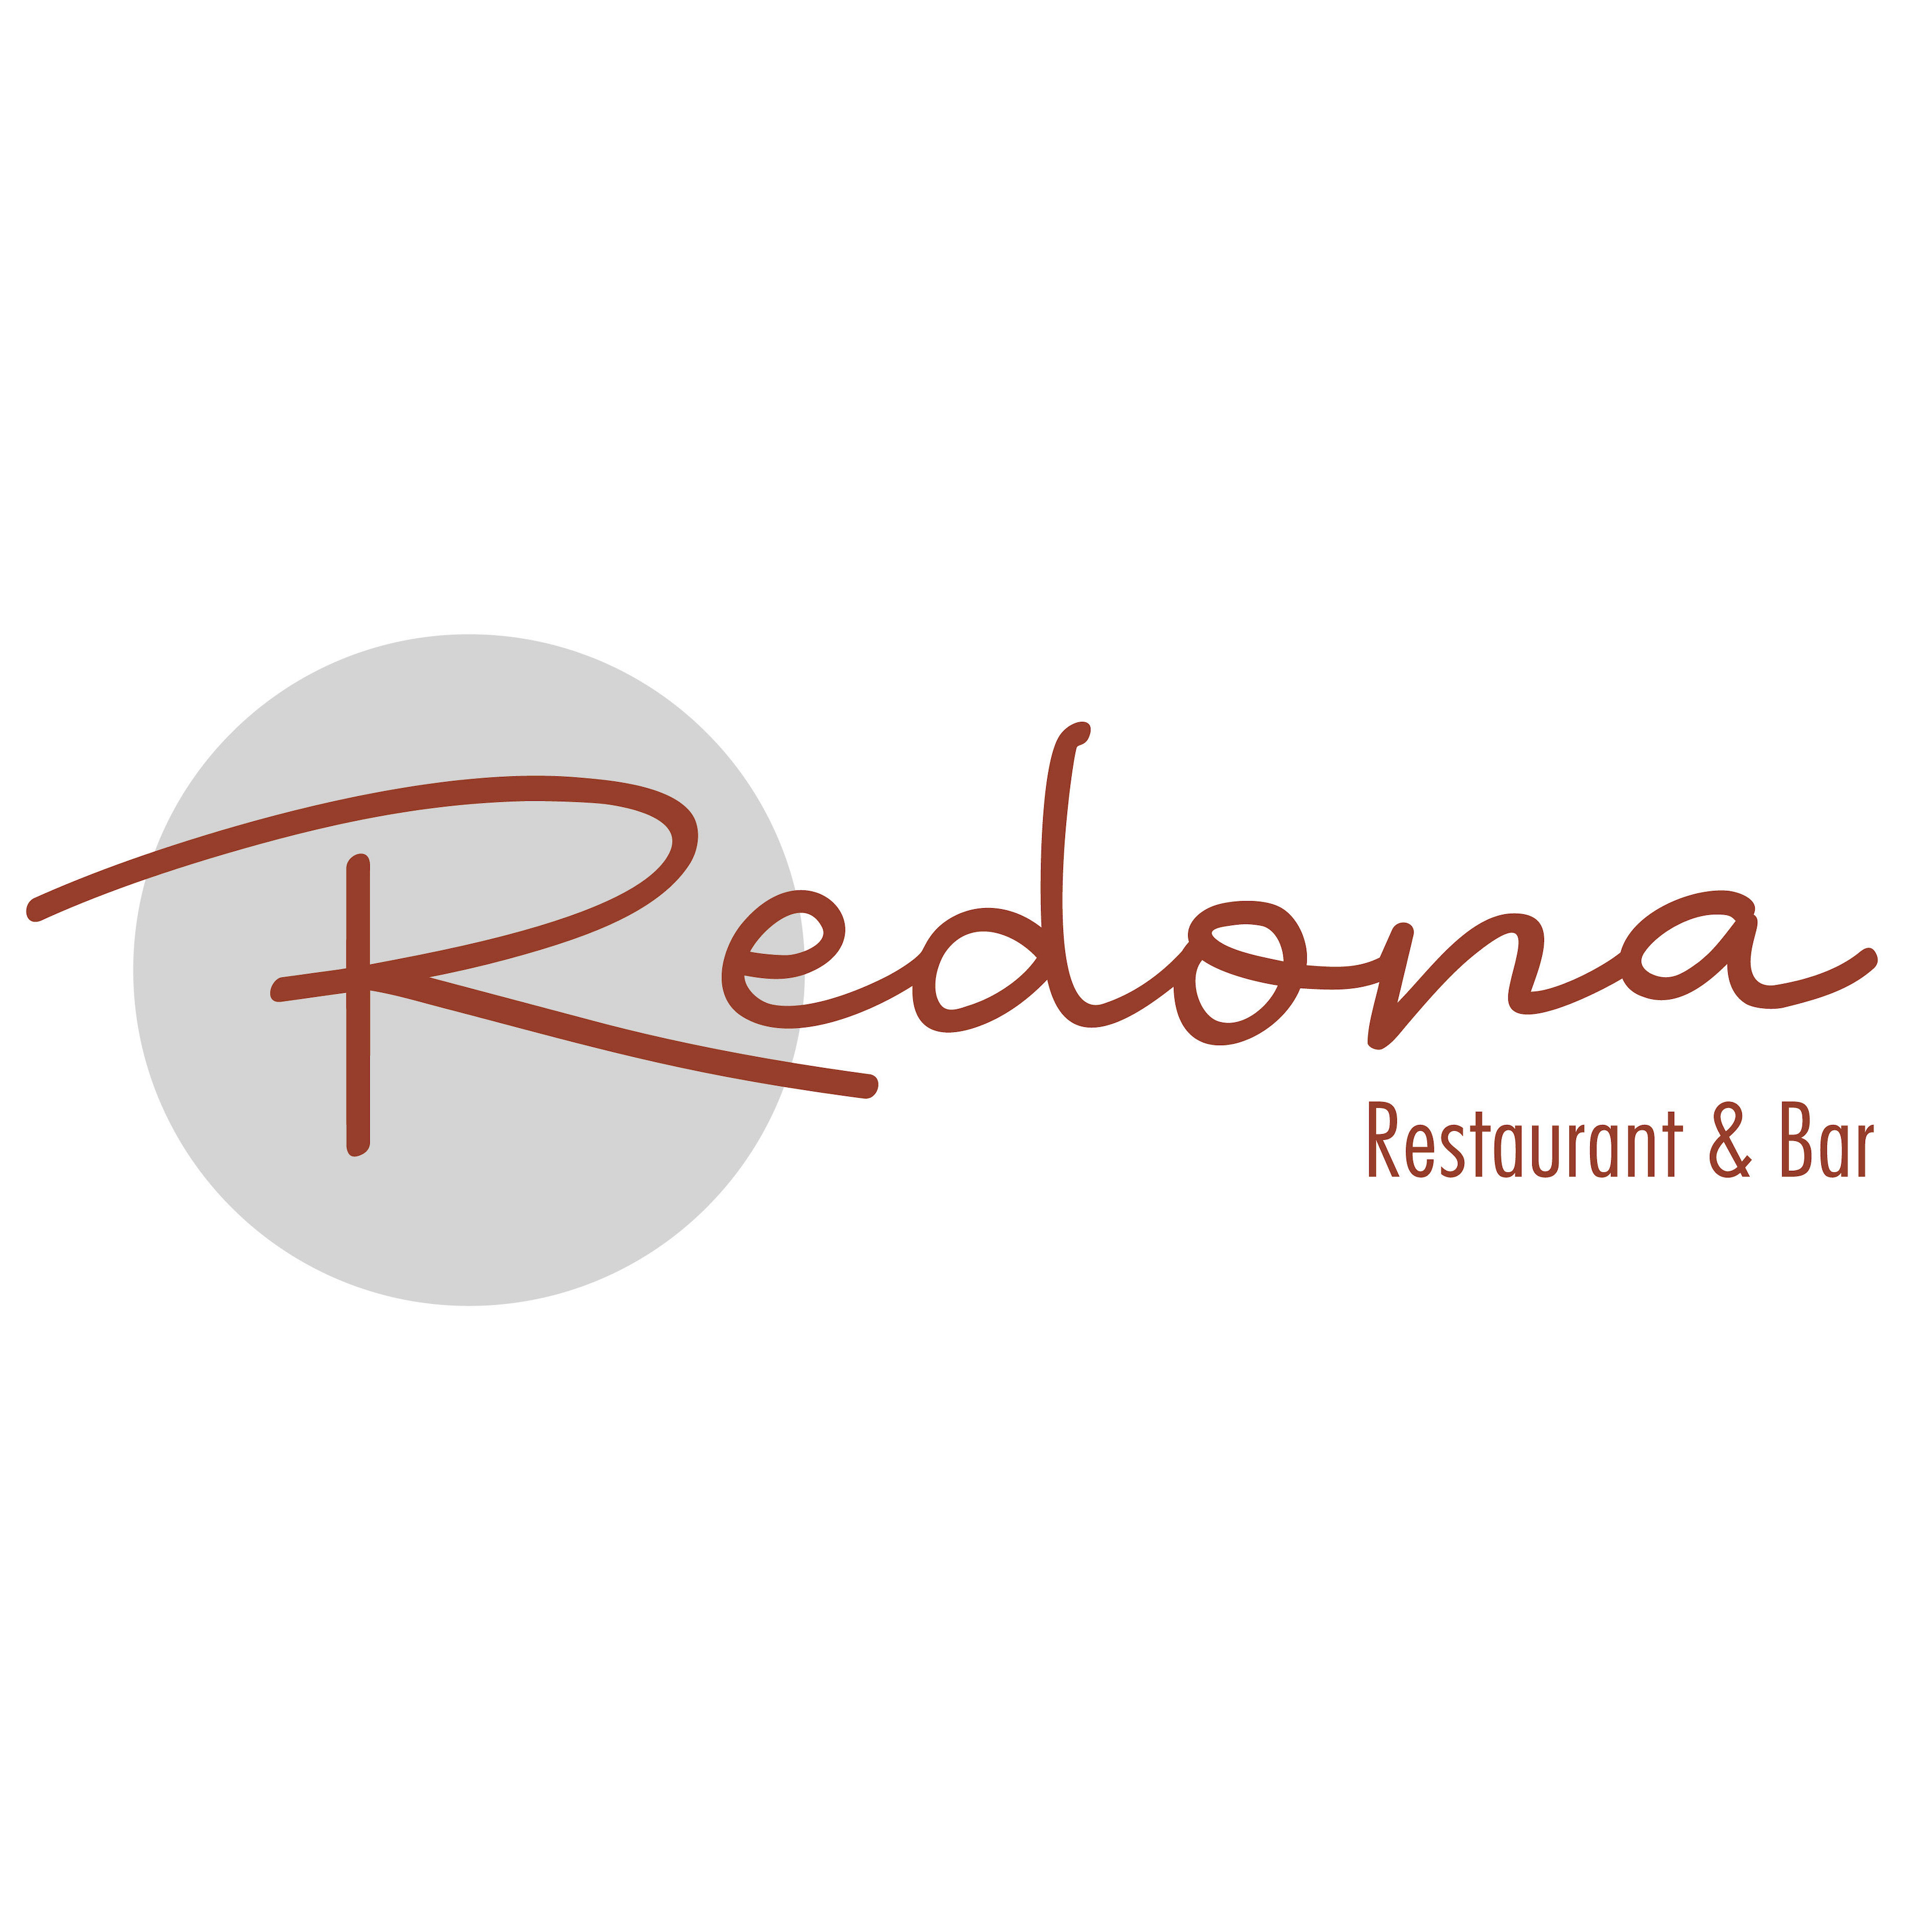 Redona - Restaurant & Bar  